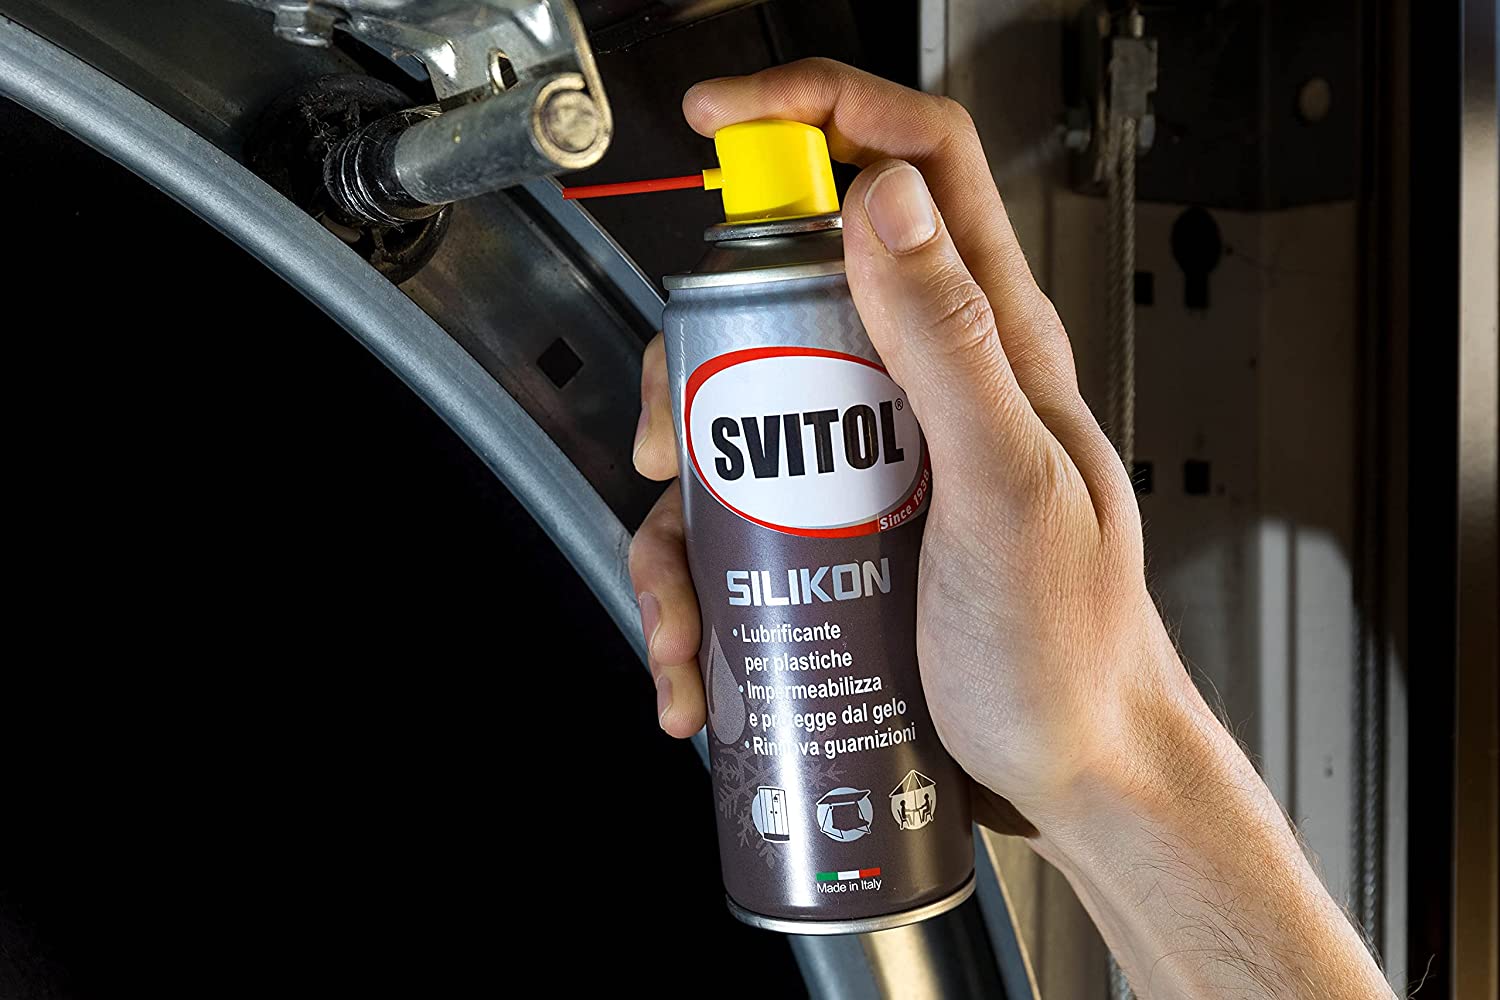 Svitol Easy Silikon lubrificante al silicone 200ml - Cod. 2324 - ToolShop  Italia